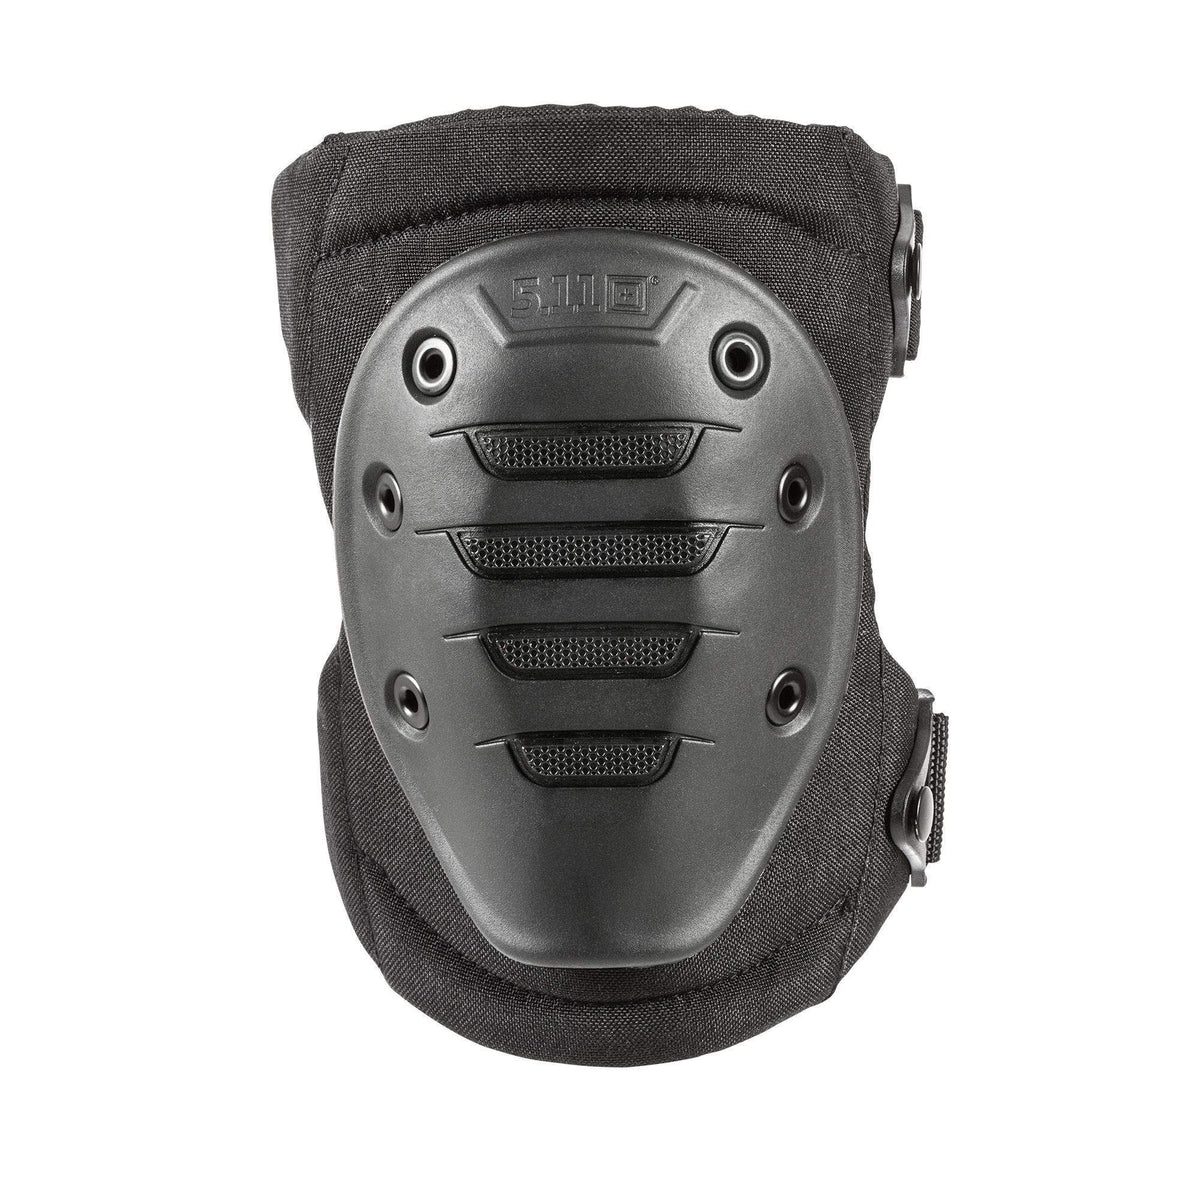 5.11 Tactical EXO.K1 External Knee Pad Knee &amp; Elbow Protection 5.11 Tactical Black Tactical Gear Supplier Tactical Distributors Australia